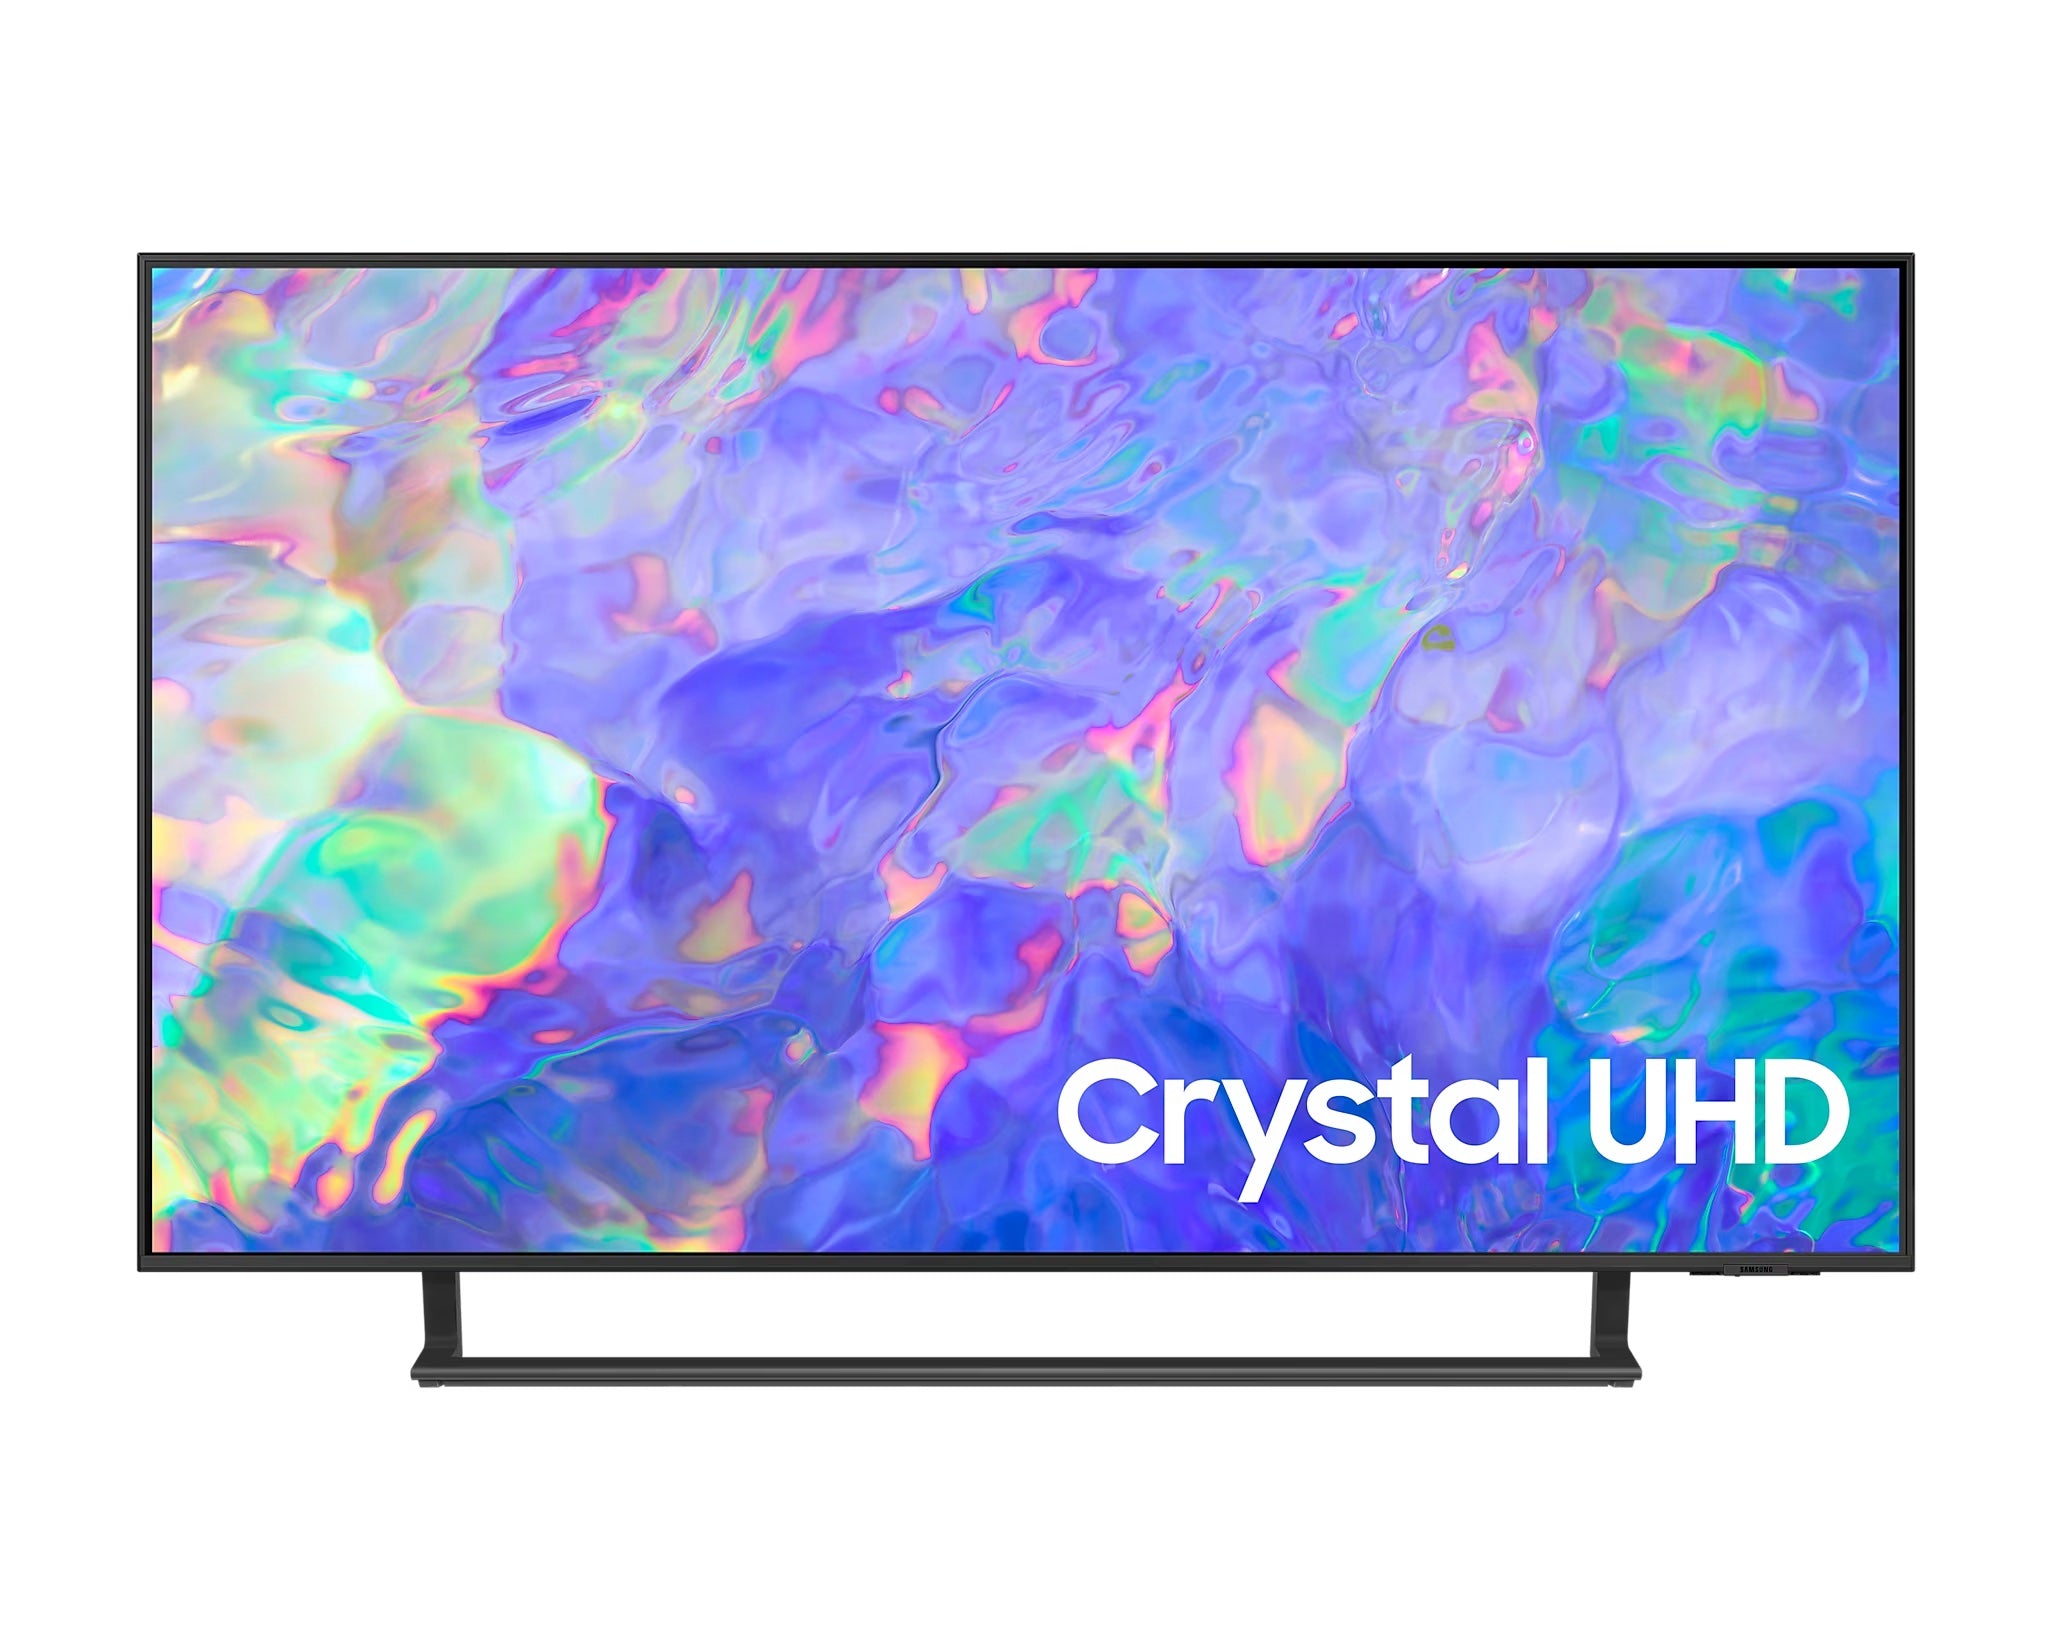 Samsung 三星 CU8500 系列 Crystal UHD 4K 電視